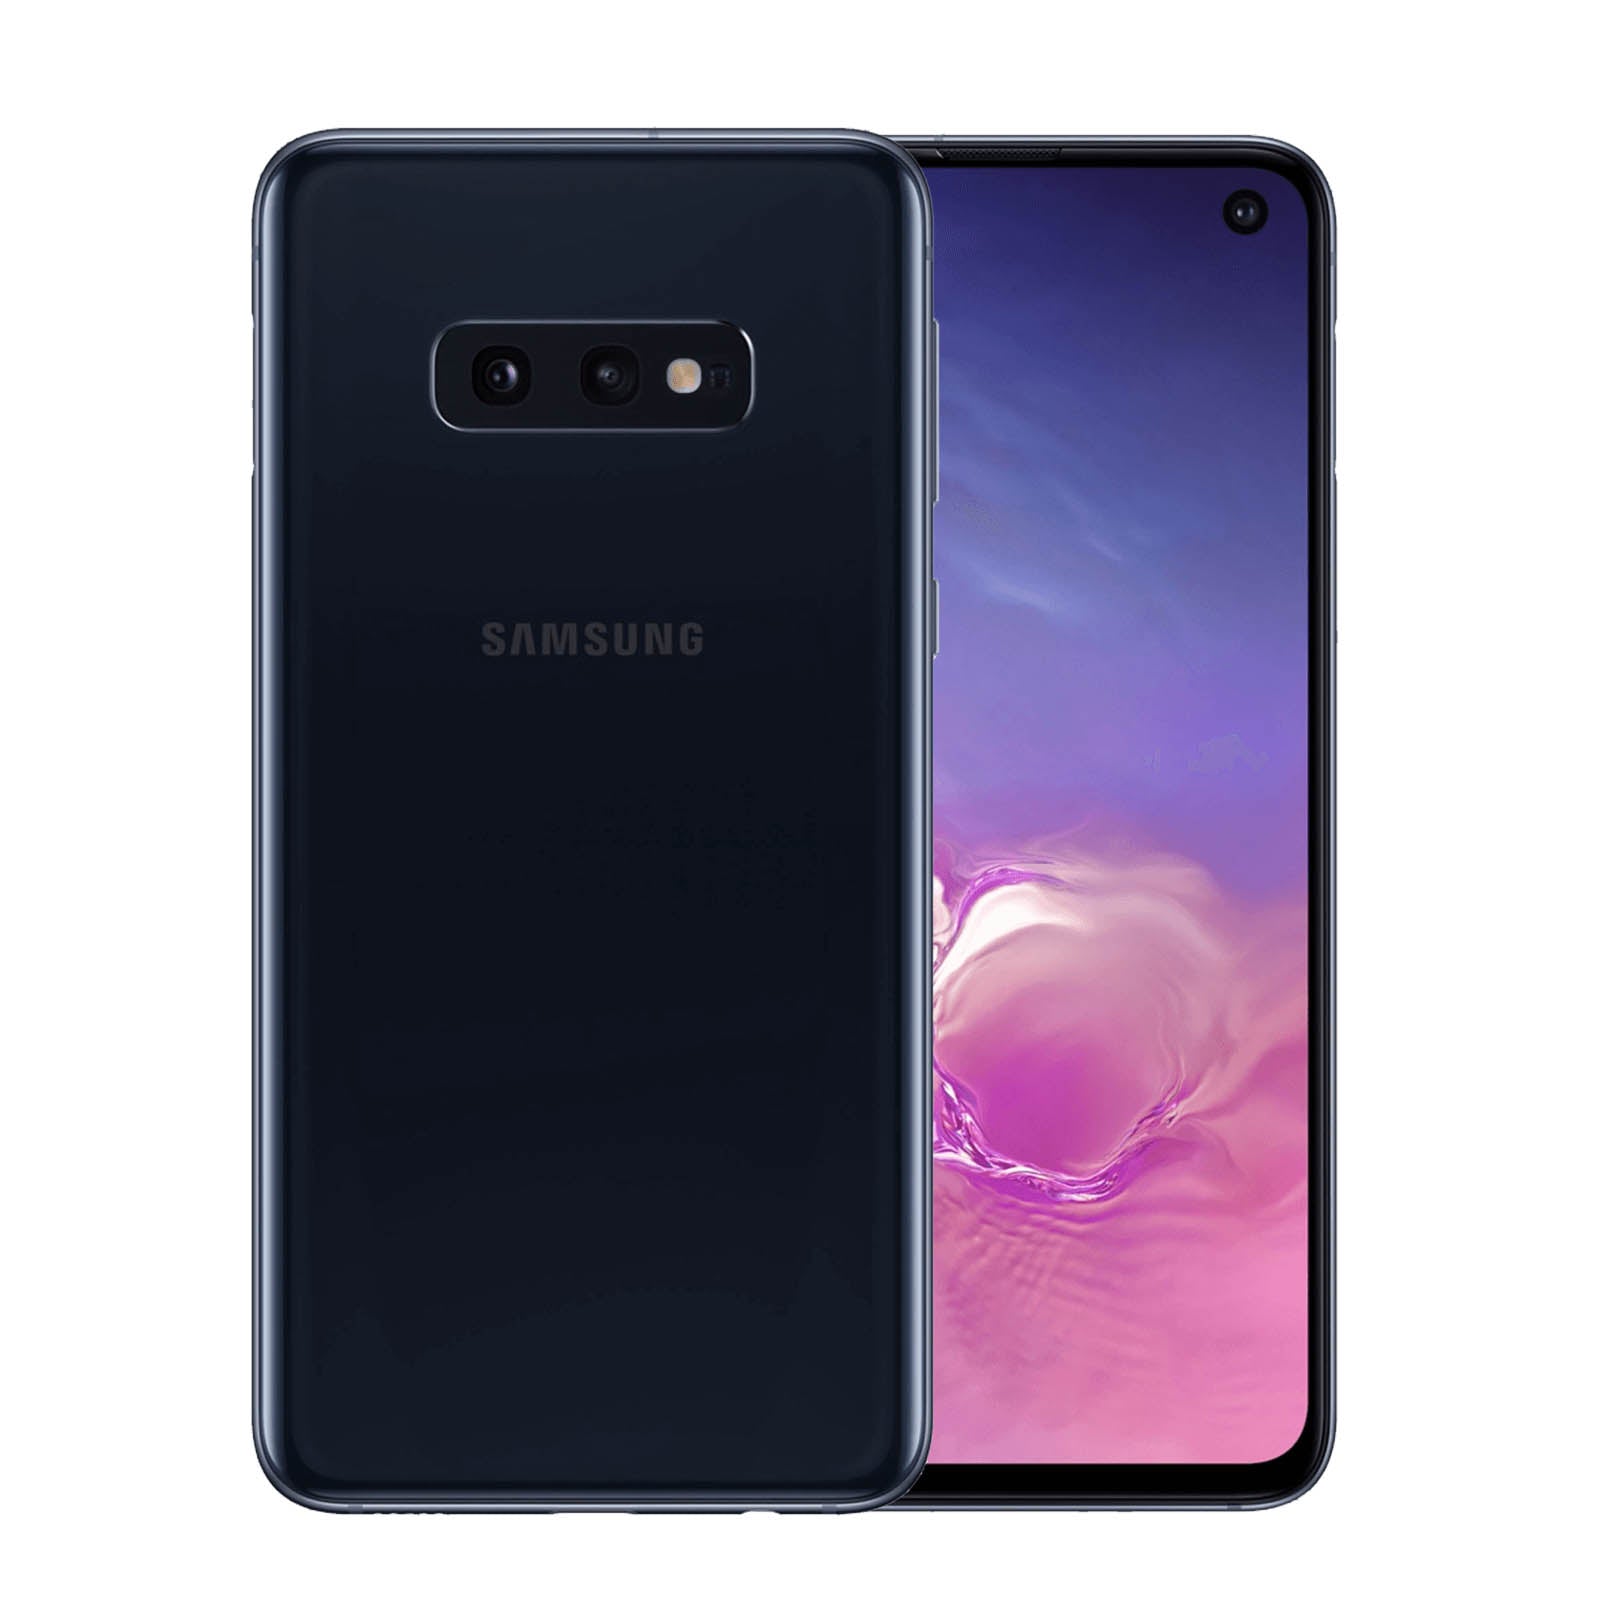 Samsung Galaxy S10E 256GB Prism Black Very good - Unlocked